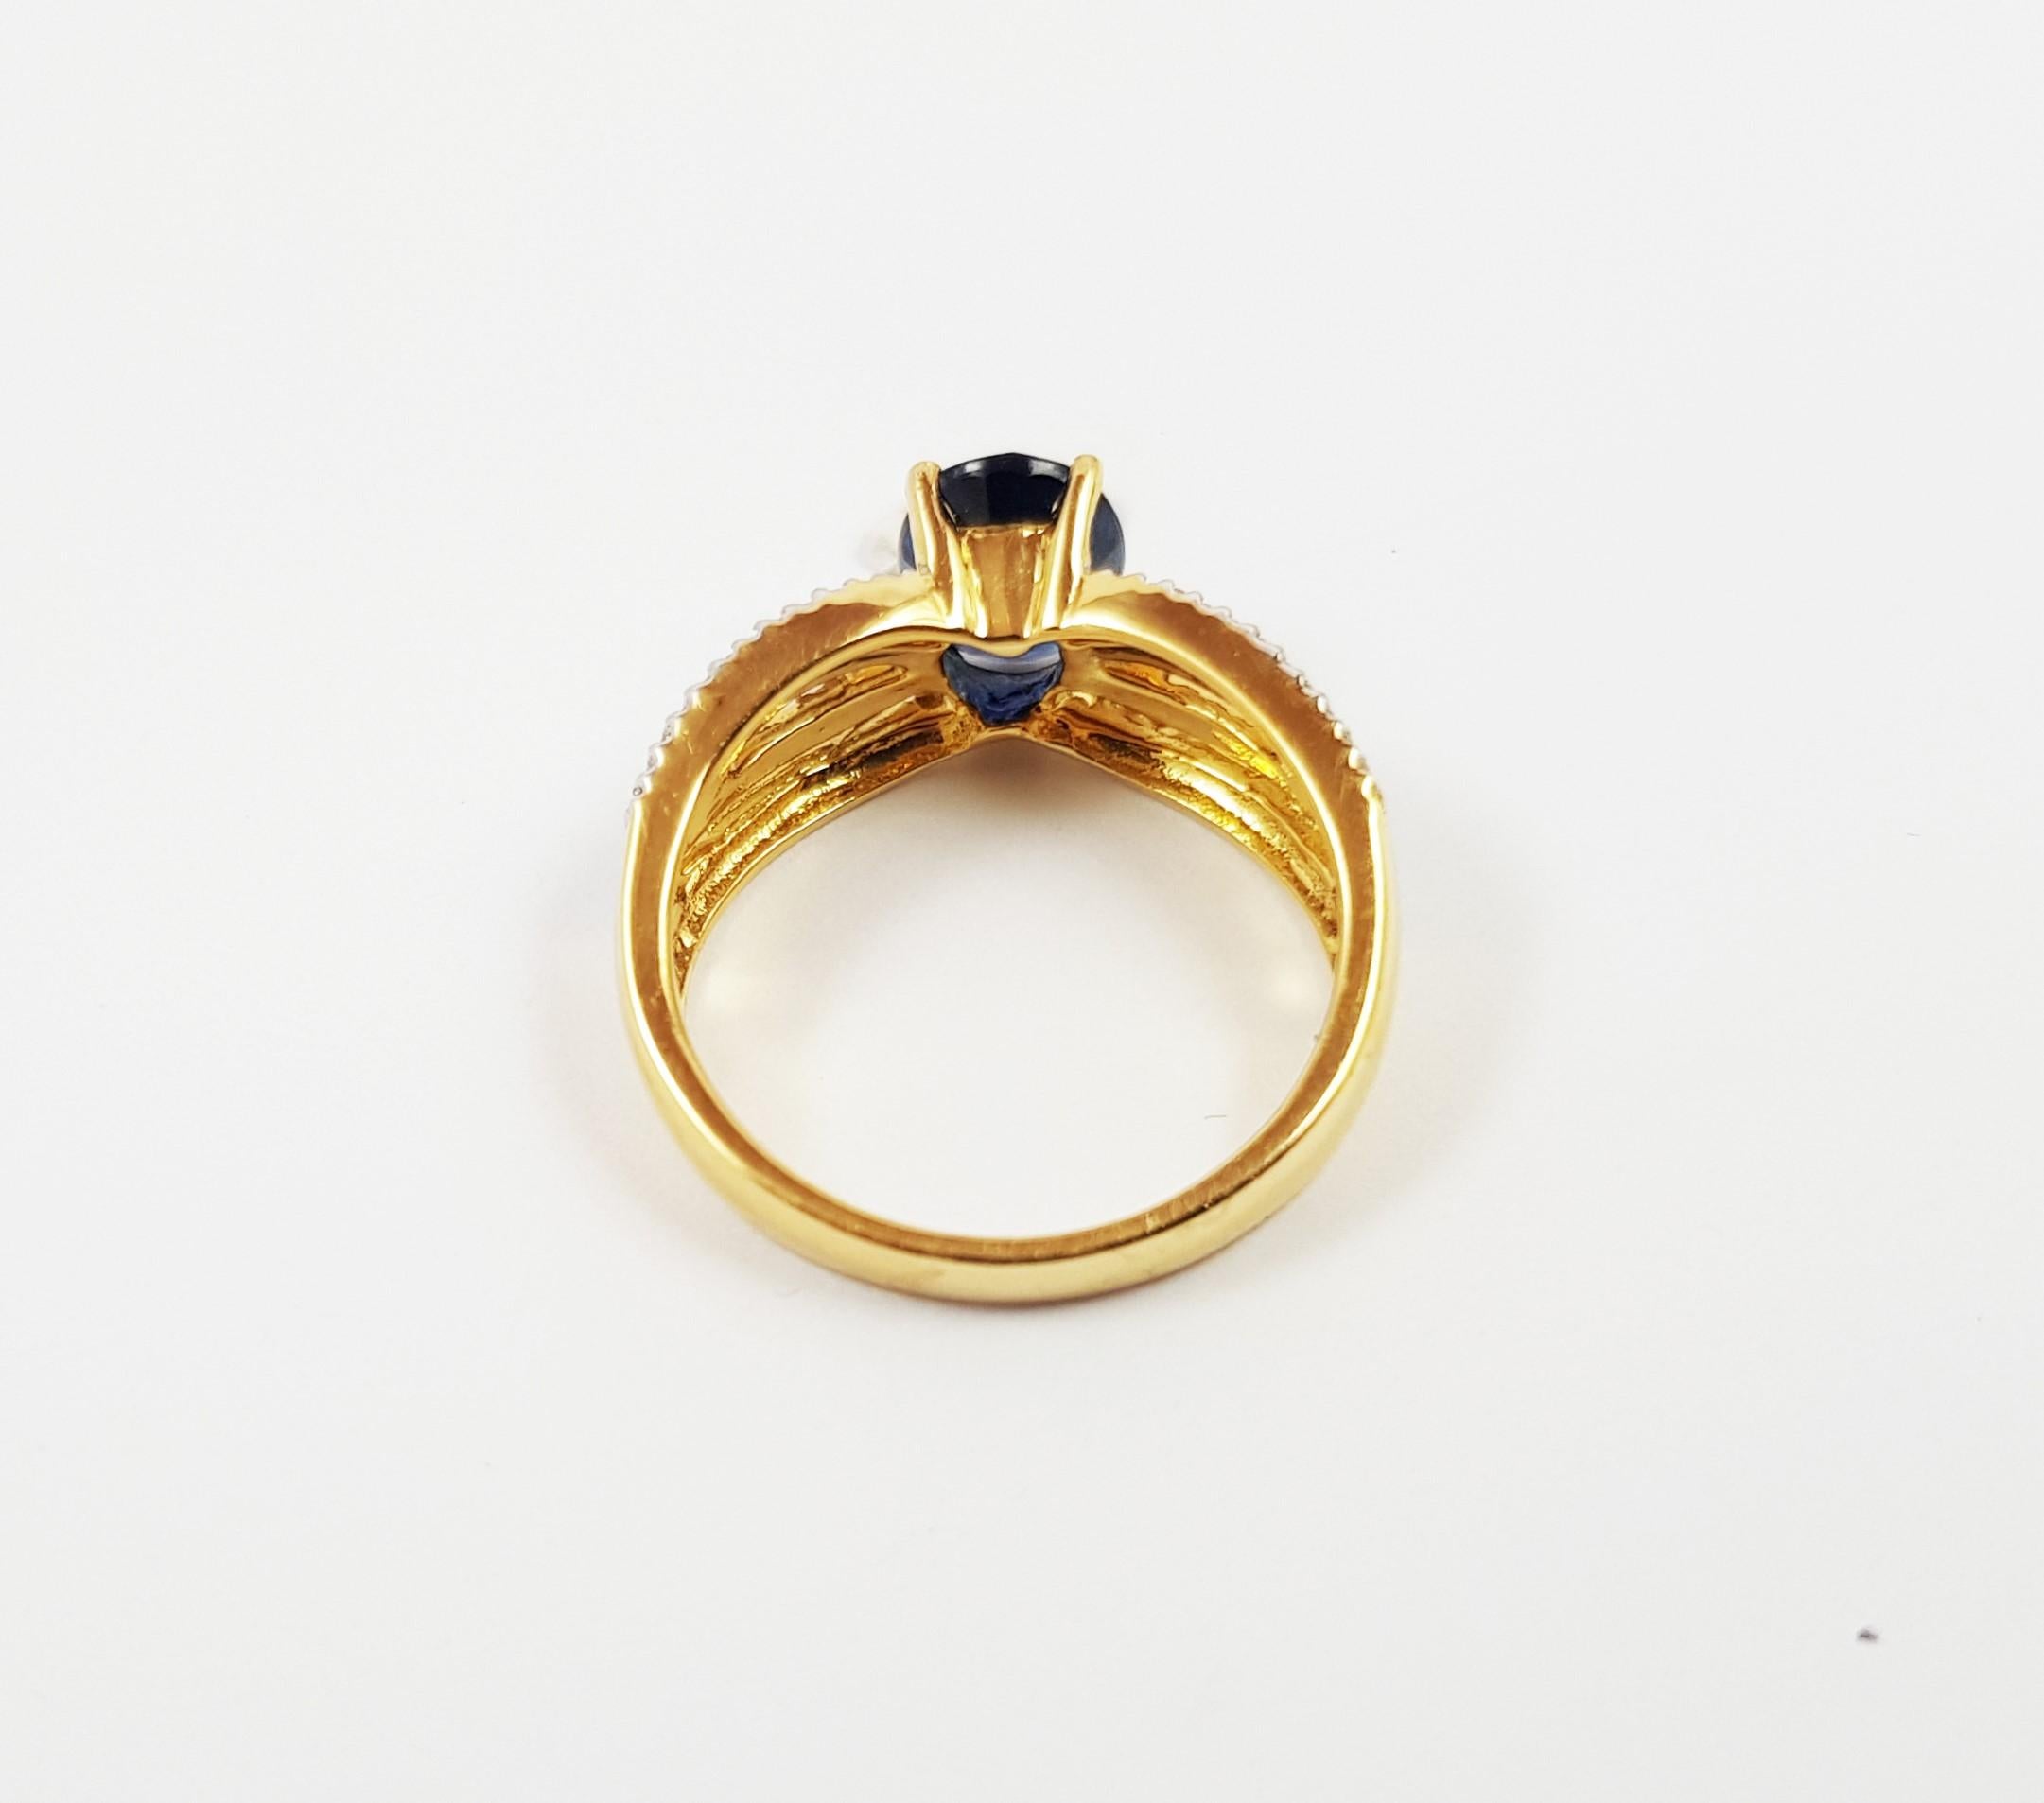 Blue Sapphire 1.81 carats with Diamond 0.24 carat Ring set in 18 Karat Gold Settings

Width: 0.6 cm
Length: 0.8 cm 
Ring Size: 53

